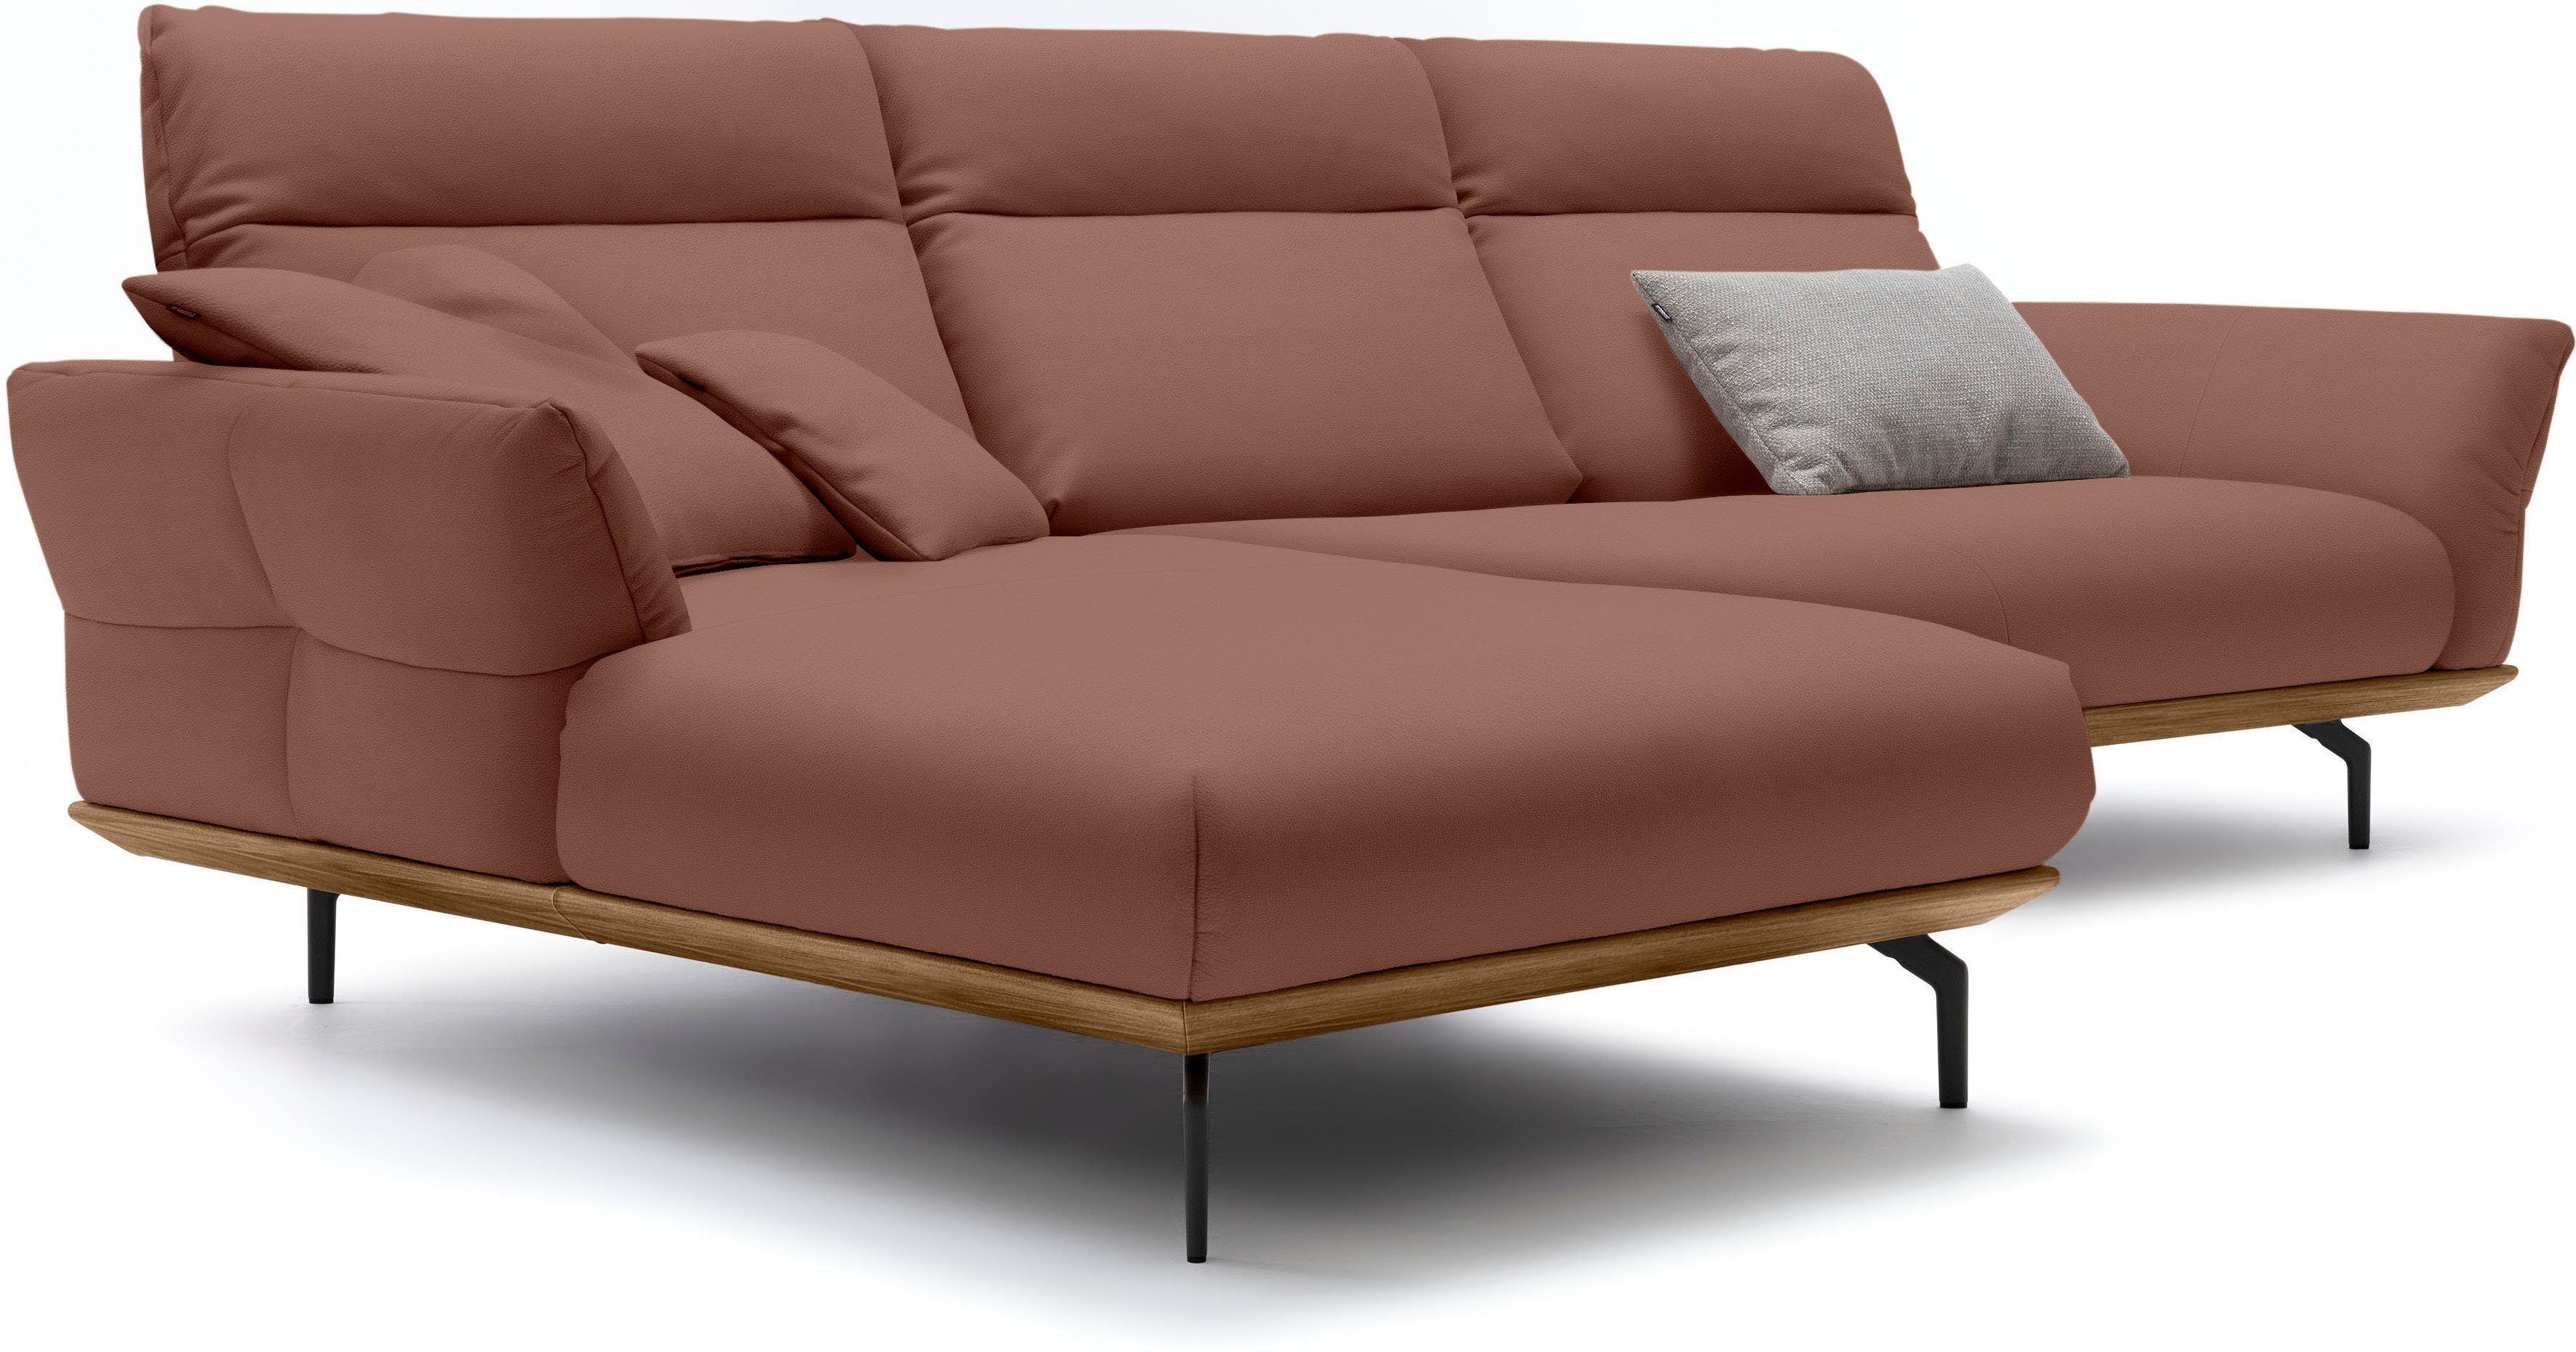 hülsta sofa Winkelfüße 318 Umbragrau, Breite in cm Nussbaum, hs.460, Ecksofa in Sockel